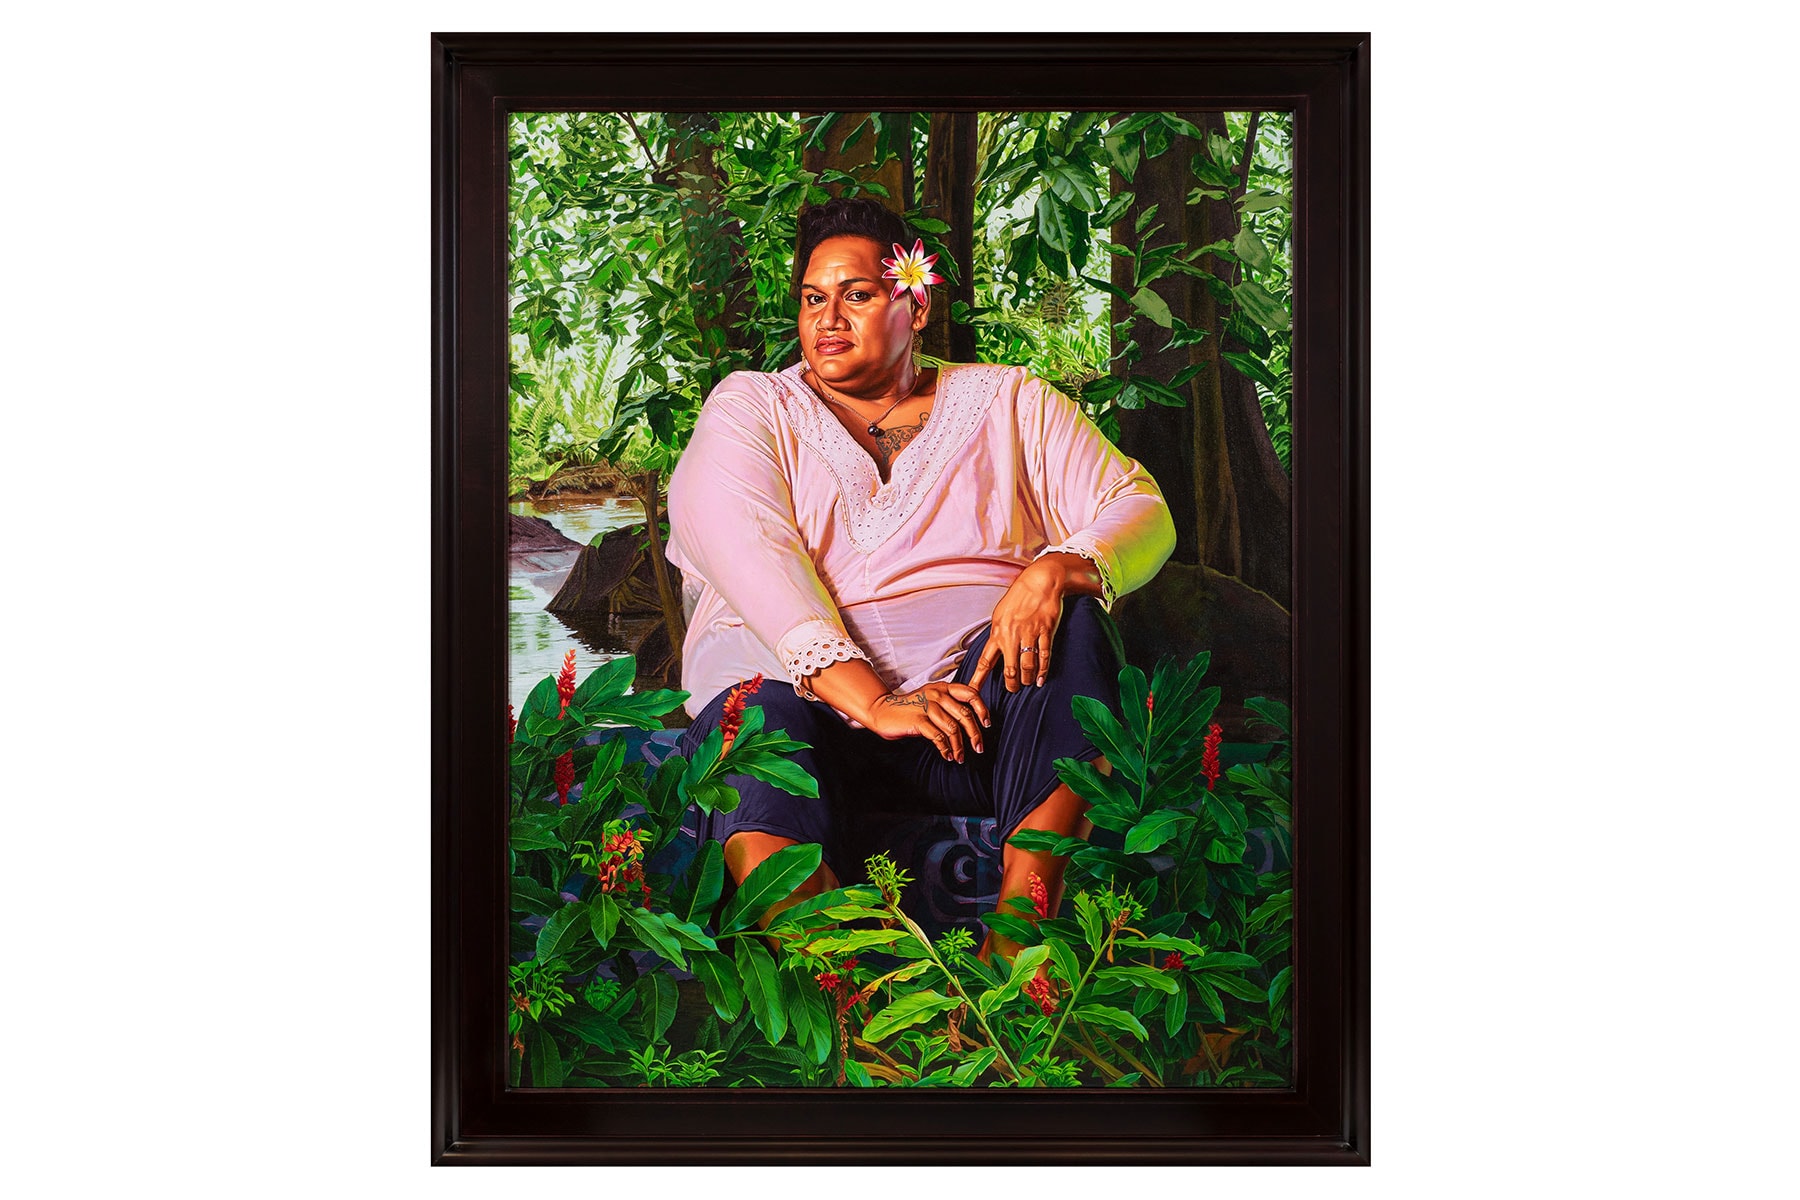 kehinde wiley tahiti galerie templon paris exhibition paintings portraits barack obama paul gauguin